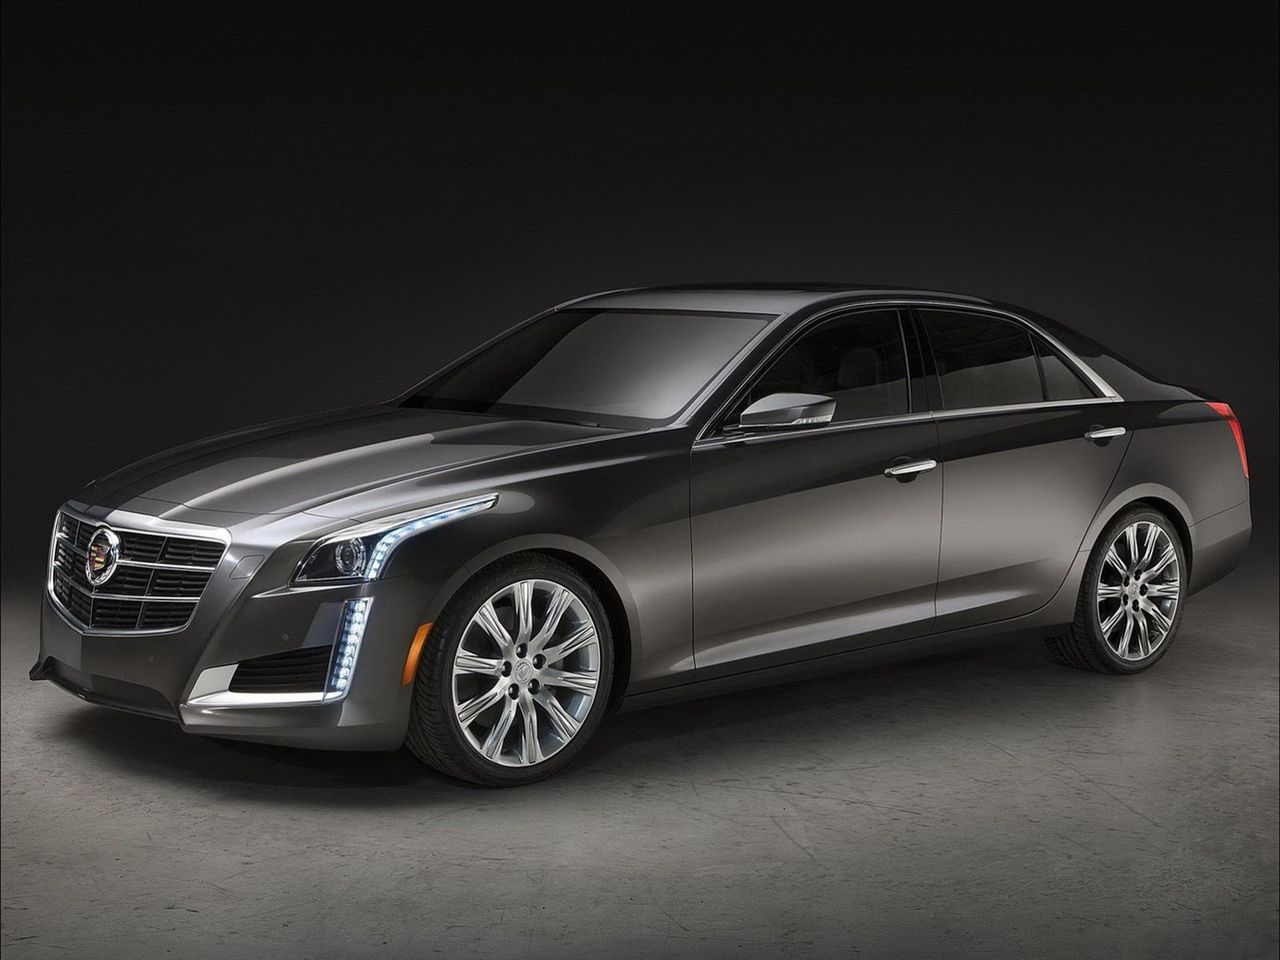 2014 Cadillac CTS zagrozi Niemcom?